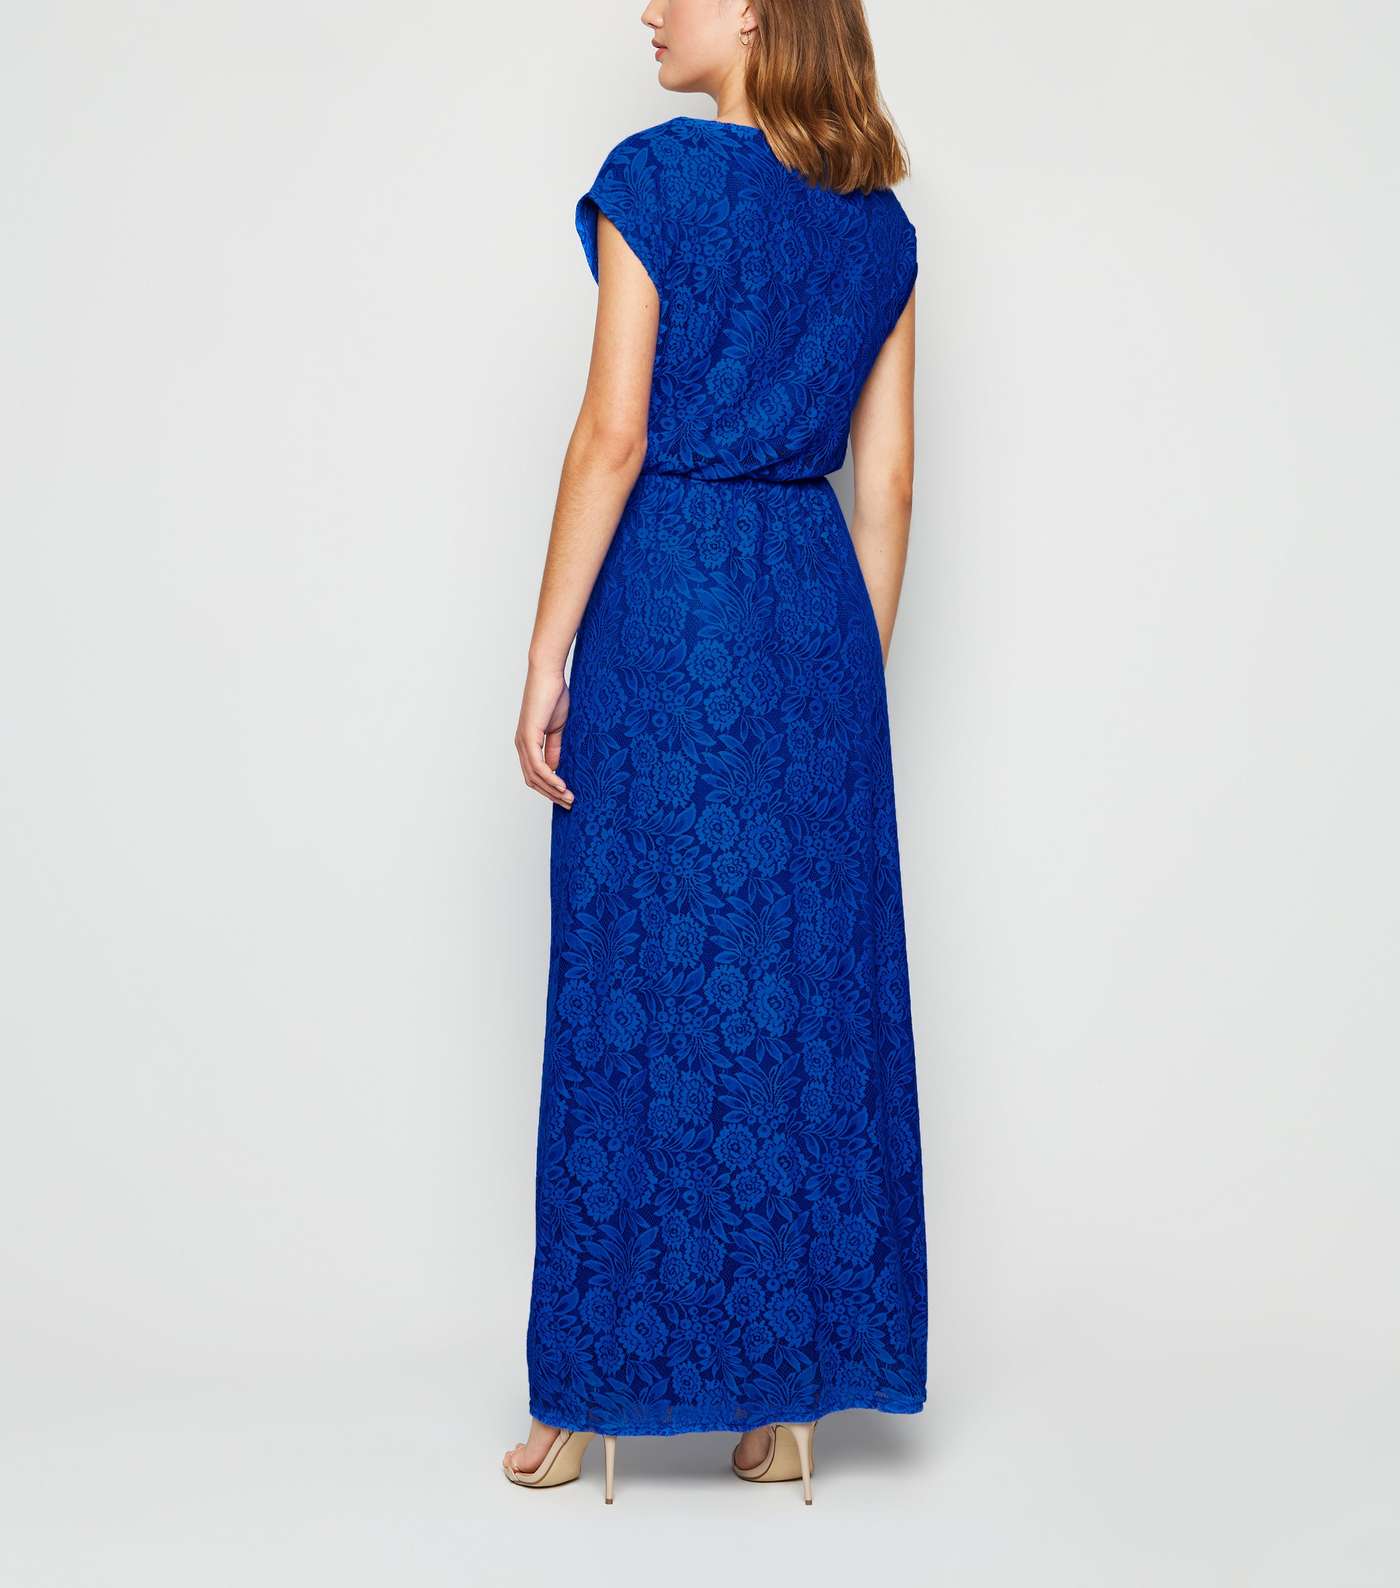 Mela Bright Blue Lace Maxi Dress Image 2